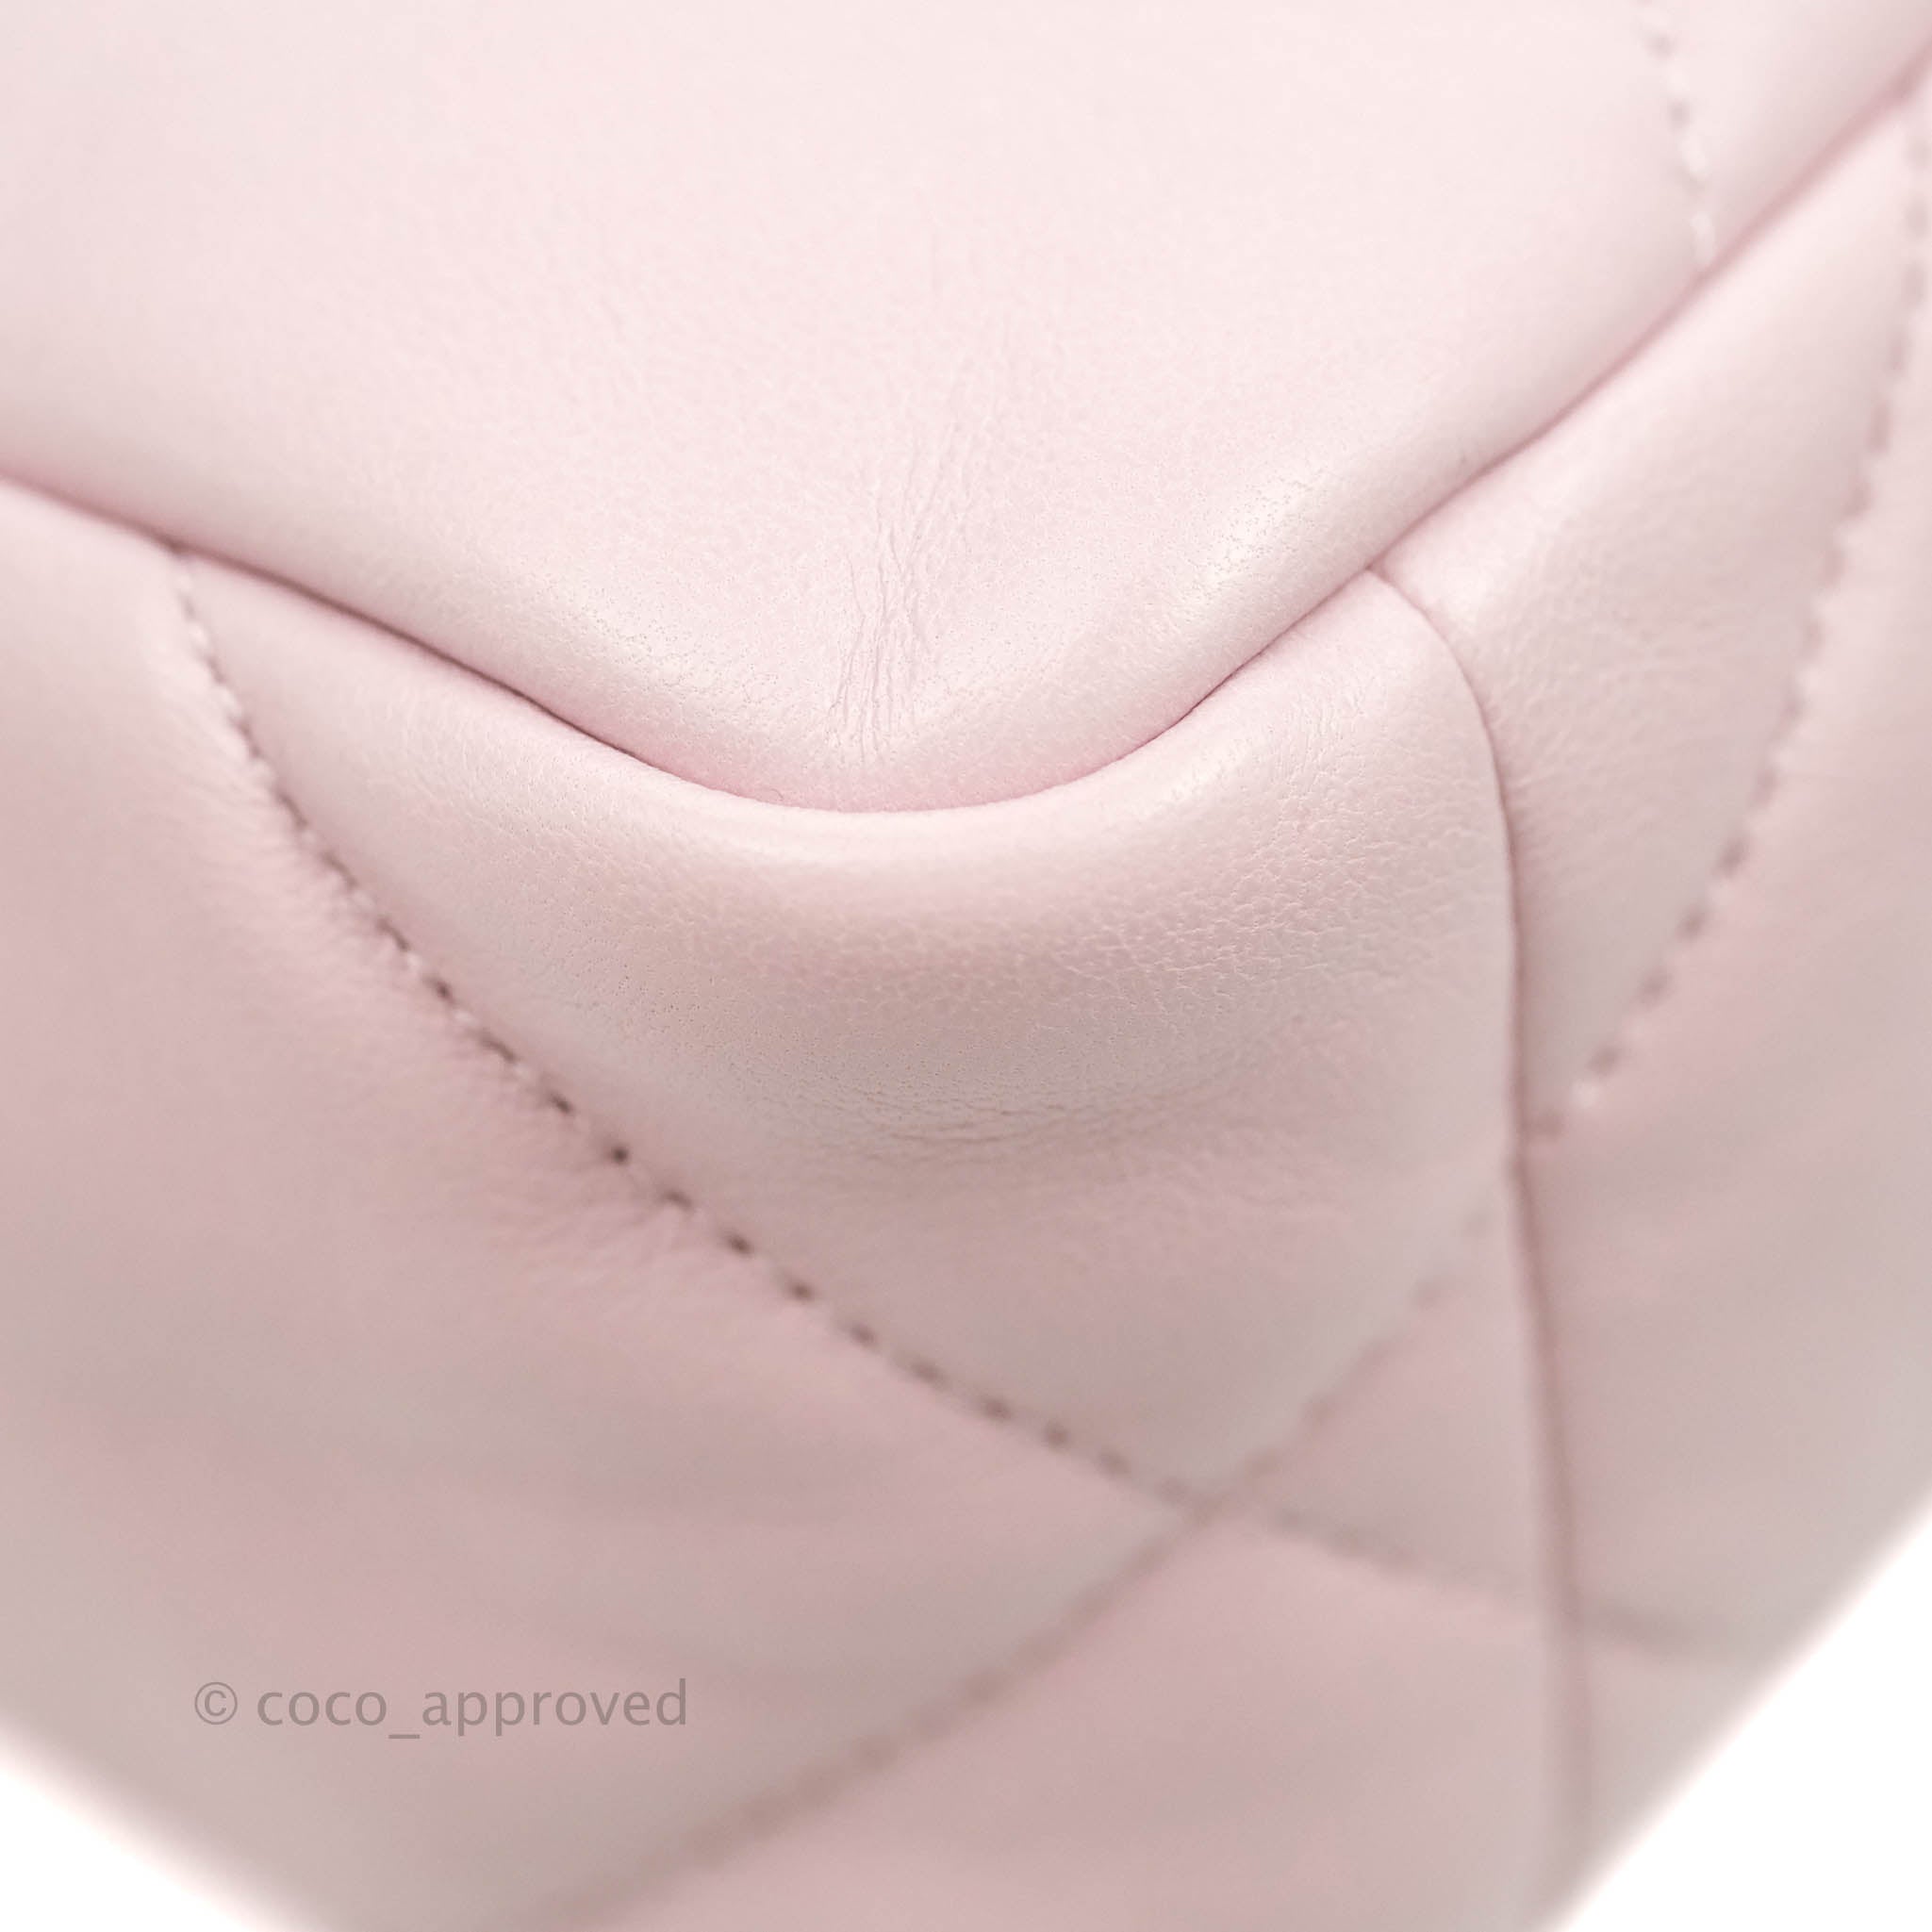 Chanel Pink Quilted Goatskin Medium Chanel 19 Bag